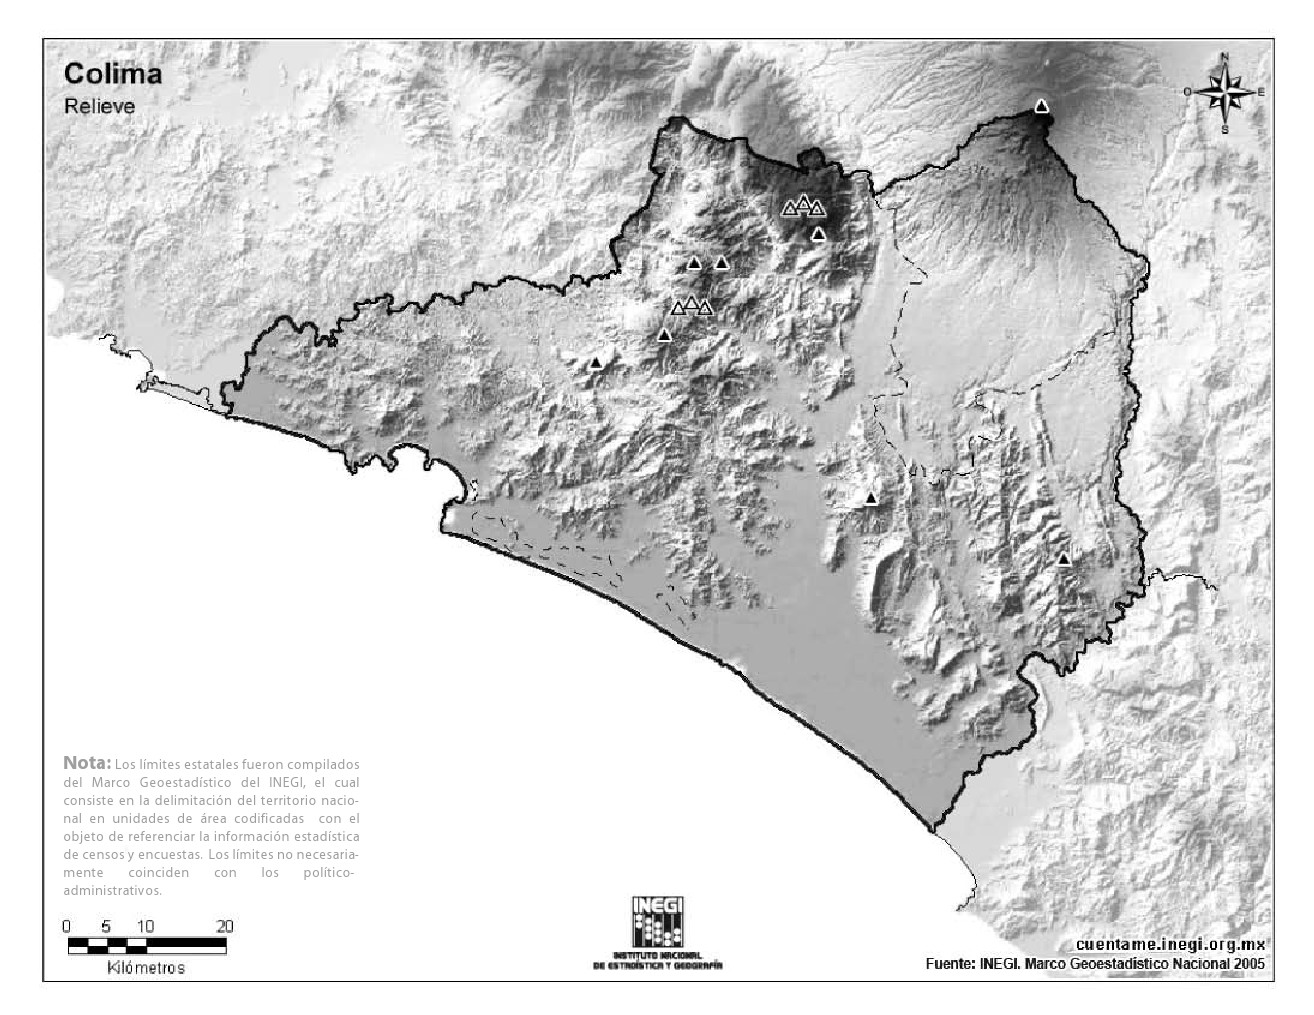 Mapa mudo de montañas de Colima. INEGI de México